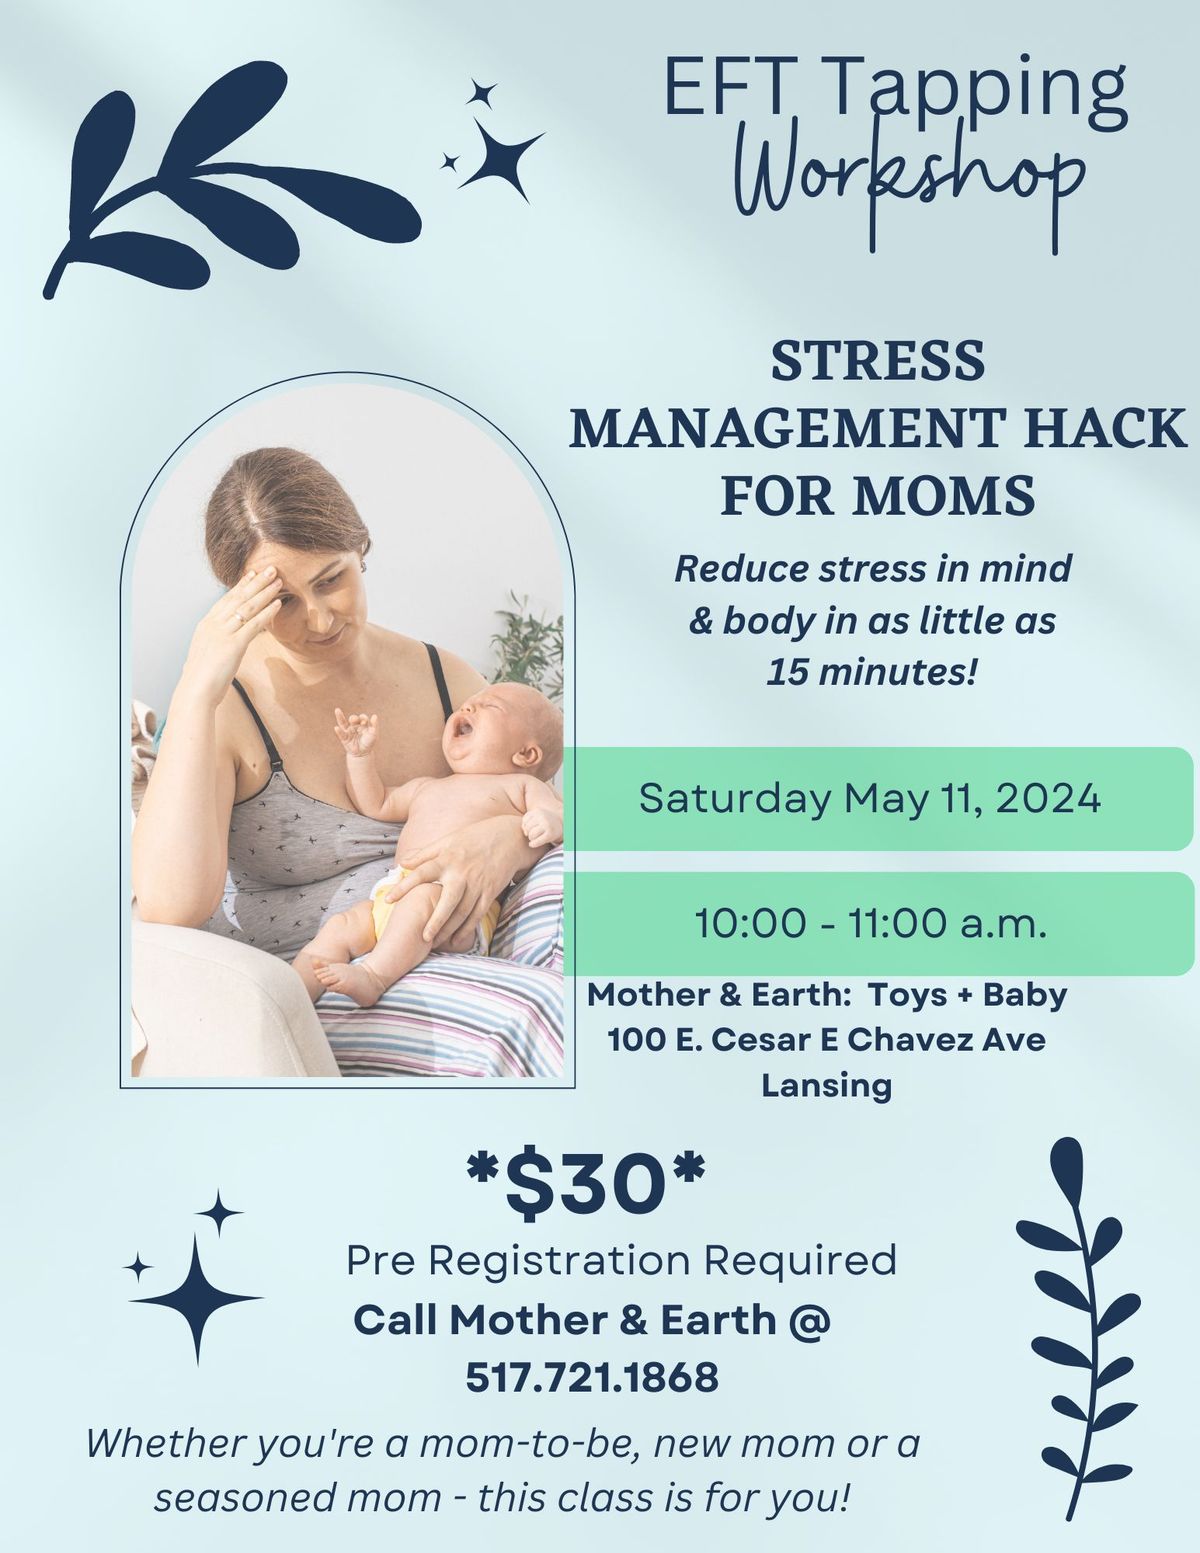 Stress Management Workshop for Moms - Learn EFT Tapping